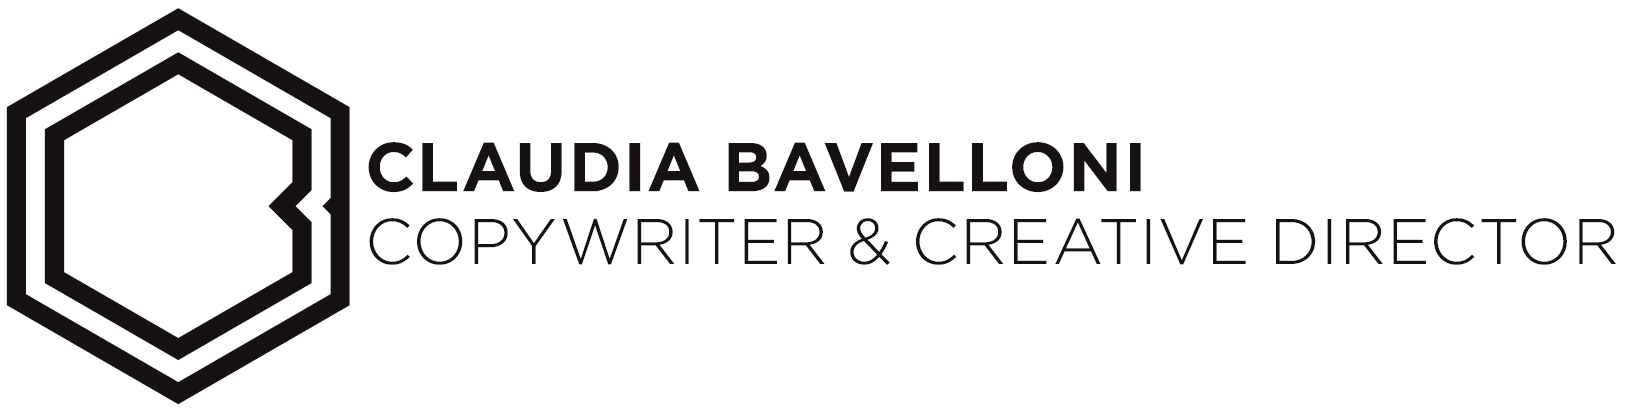 Claudia Bavelloni - Creative Director &amp; Copywriter